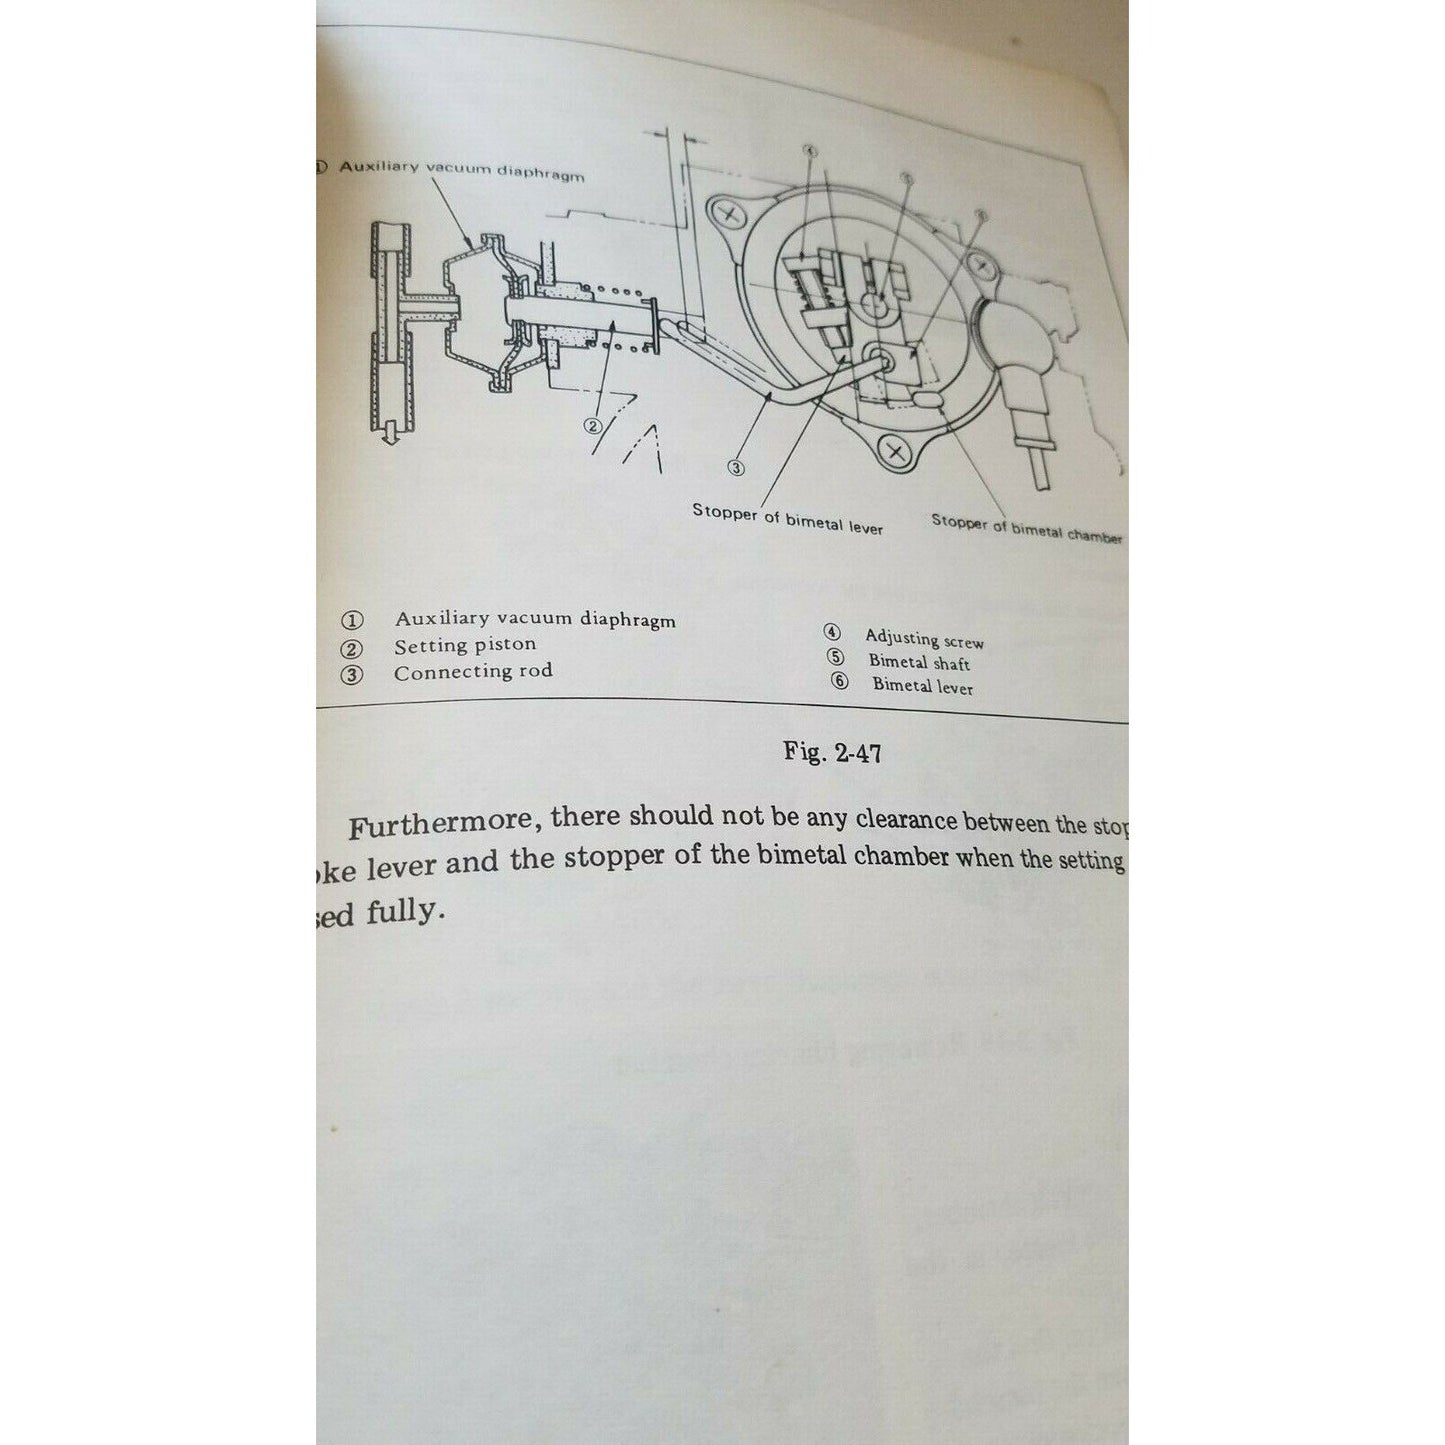 1974  Subaru 1400 MSA 102 B Year USA Model Service Manual Engine Section